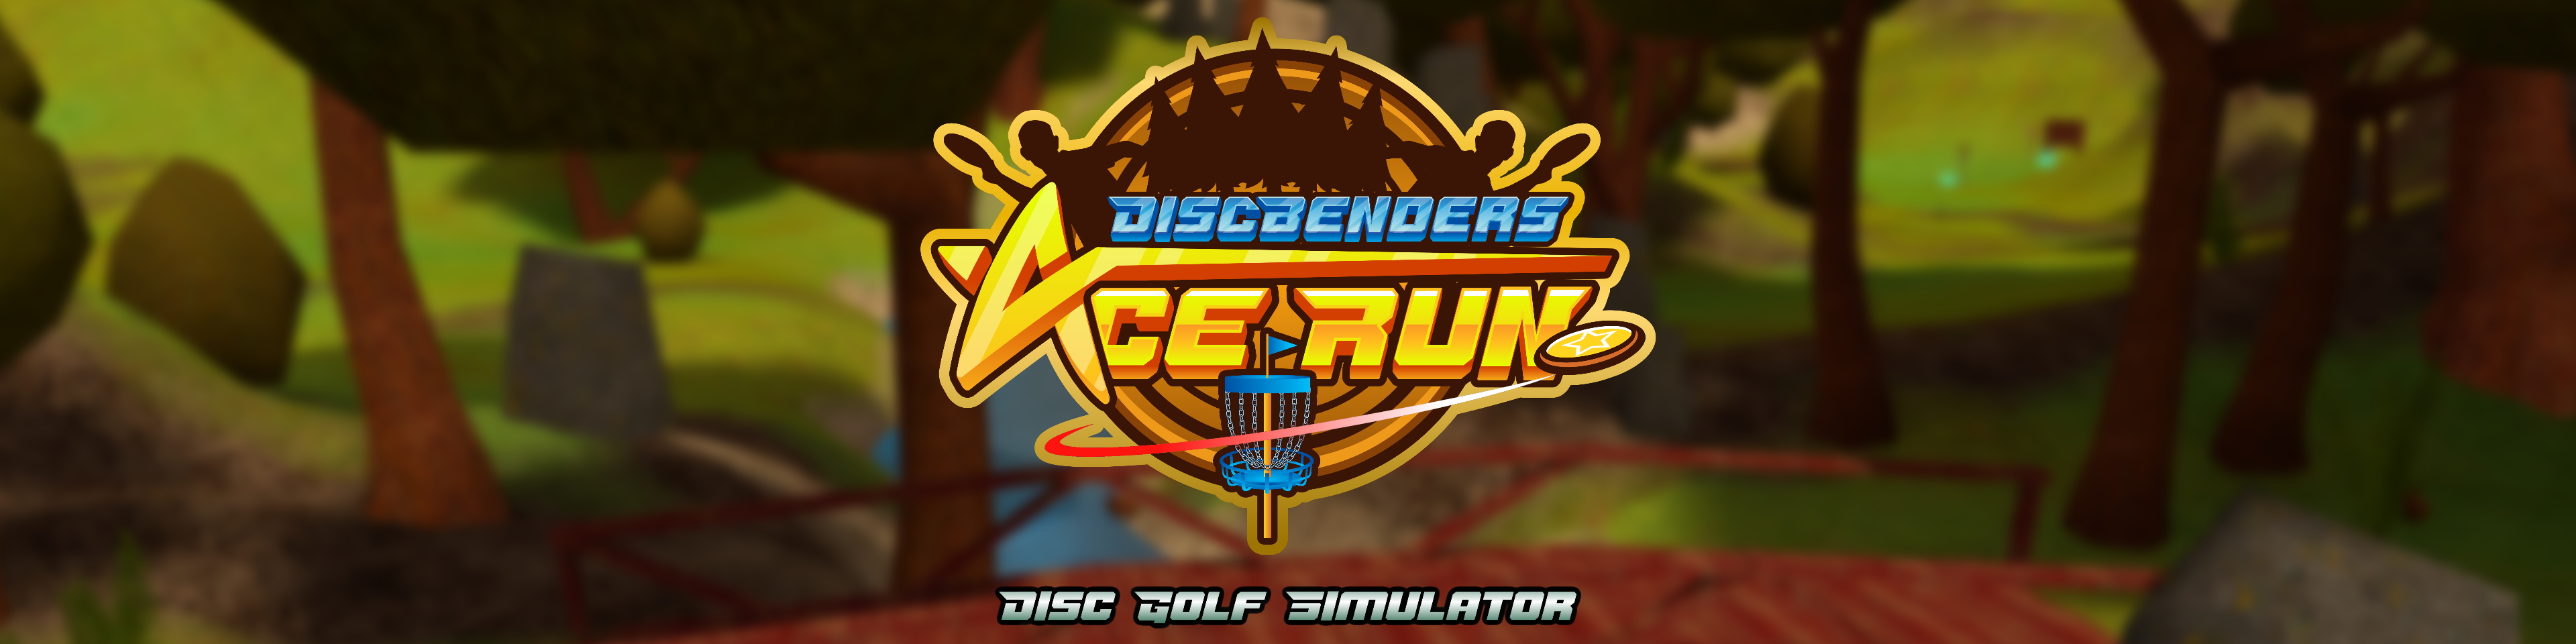 Disc Benders: Ace Run рЯ•ПрЯ•љ